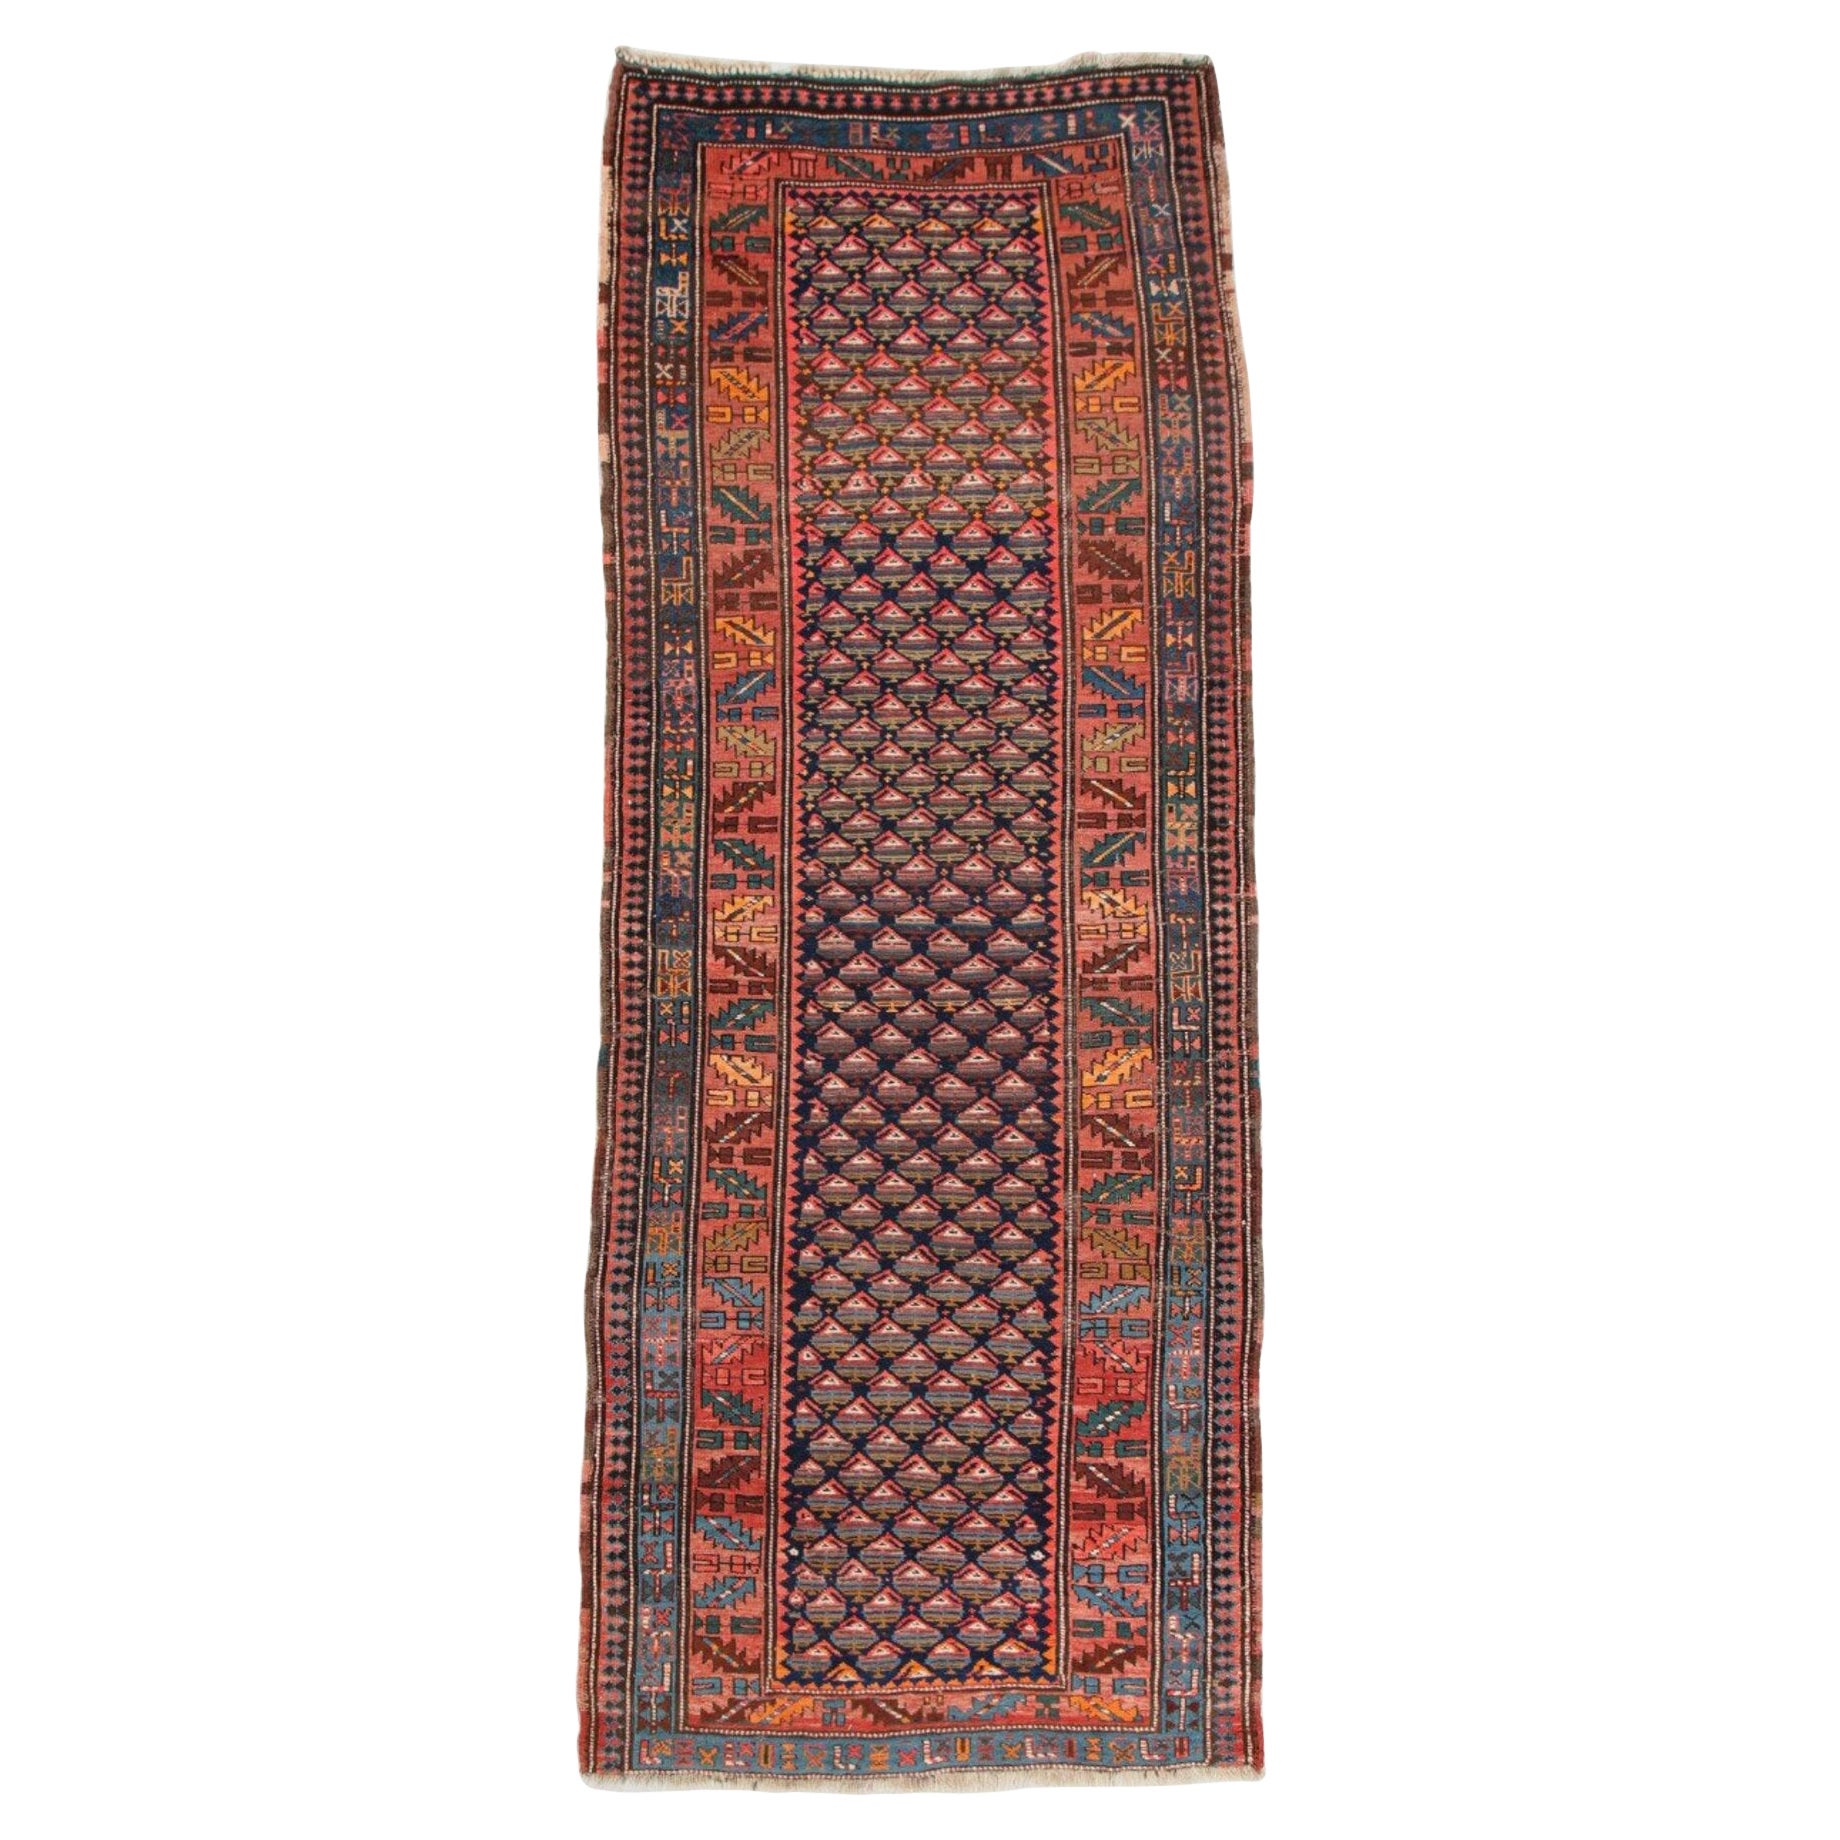 Antique Navy Blue Tribal Geometric Persian Kurd Runner Rug, c. 1900